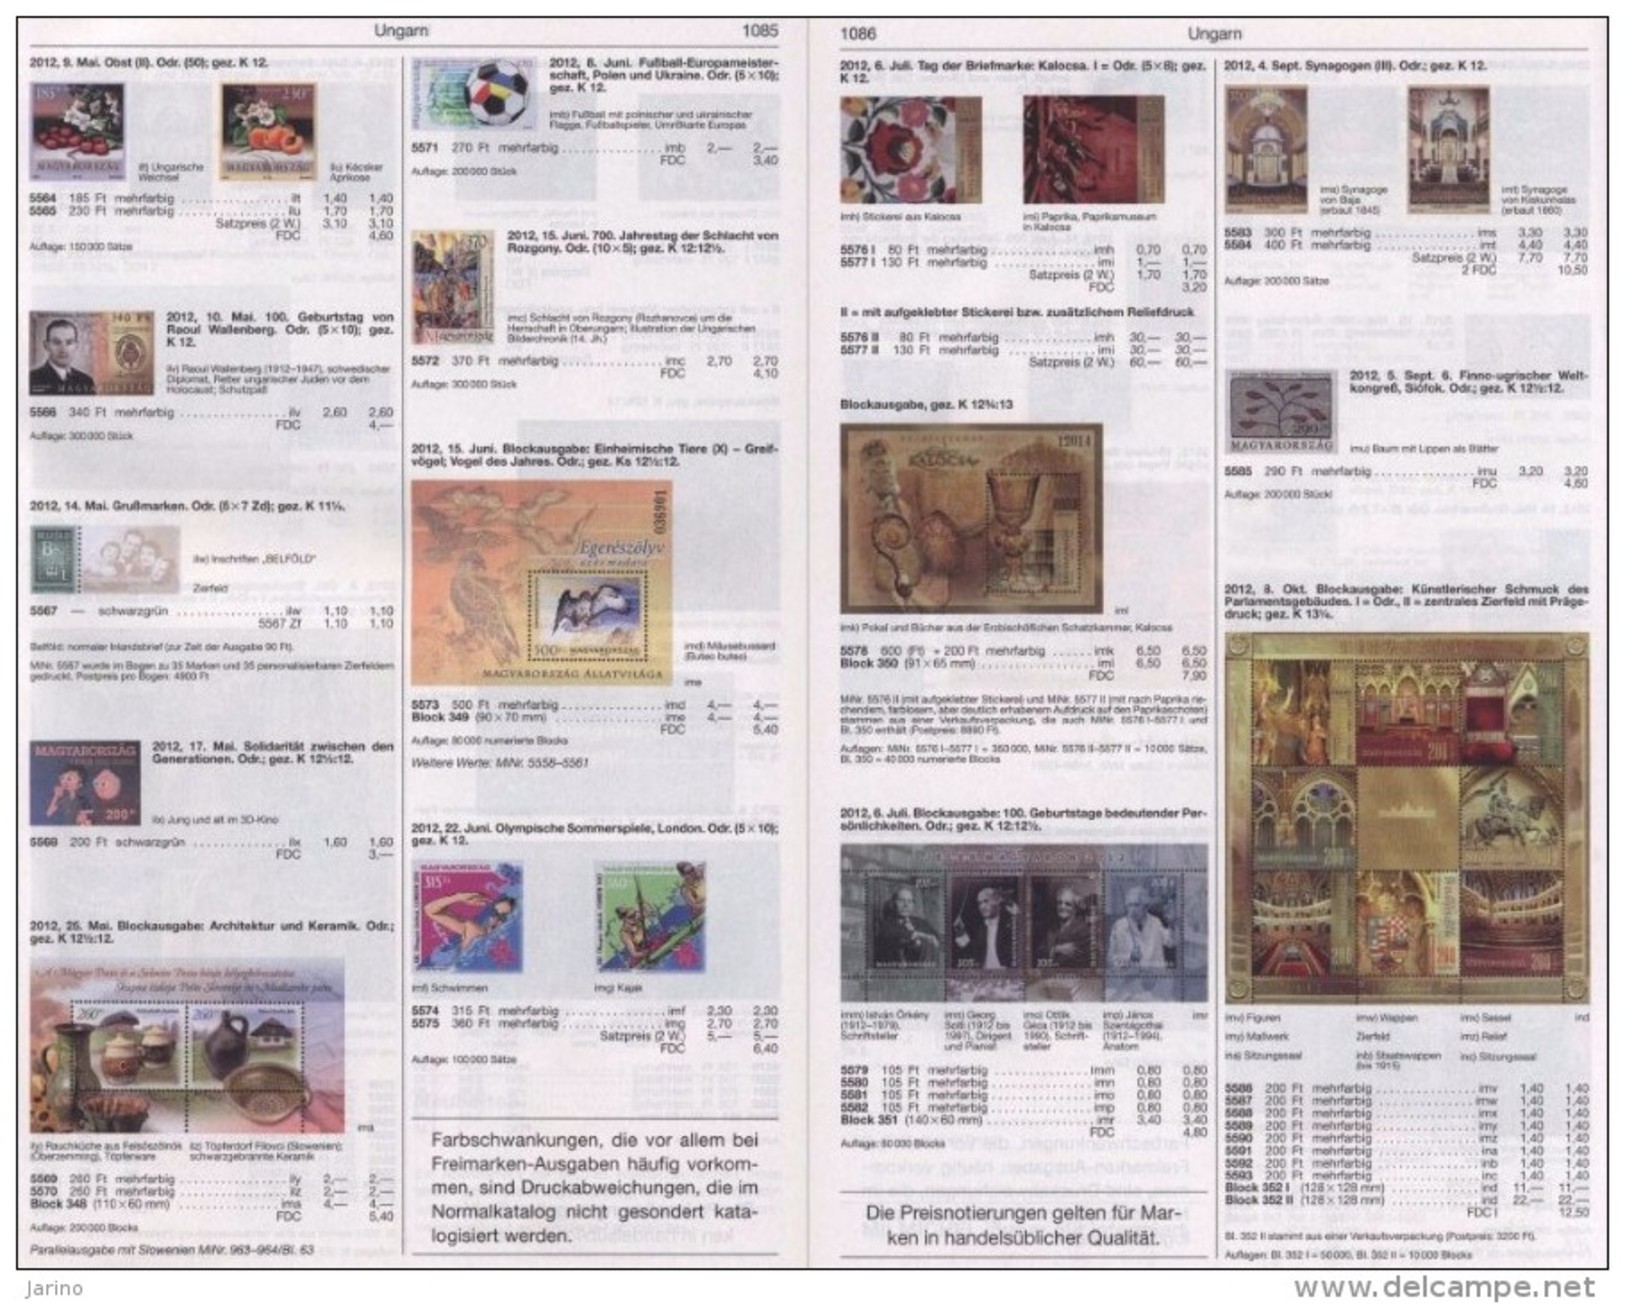 Katalog Michel Mitteleurop 2013,1205 Farbseiten DVD-R Lichtenstein Austria Slovakia Czech Swiss Hungary Czechoslovakia